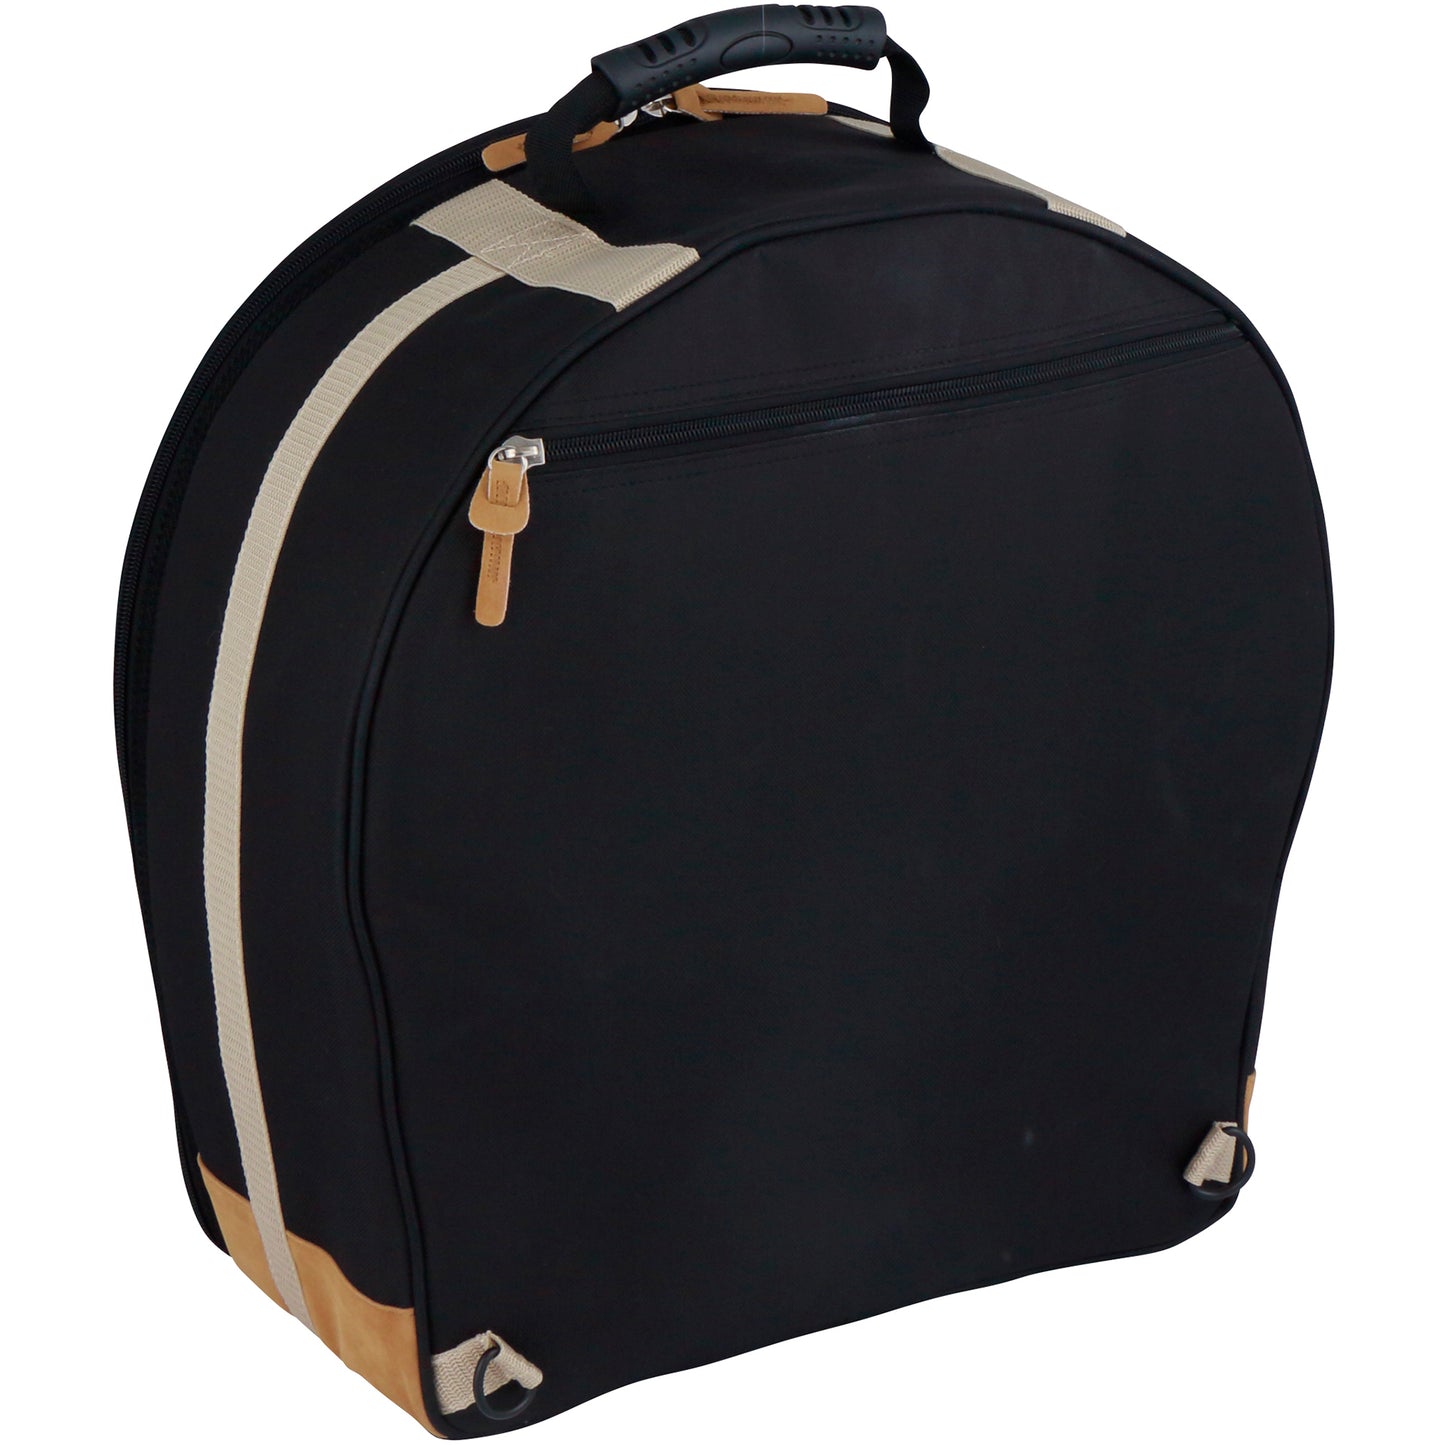 TAMA PowerPad Designer Collection Snare Drum Bag 6.5x14" Black